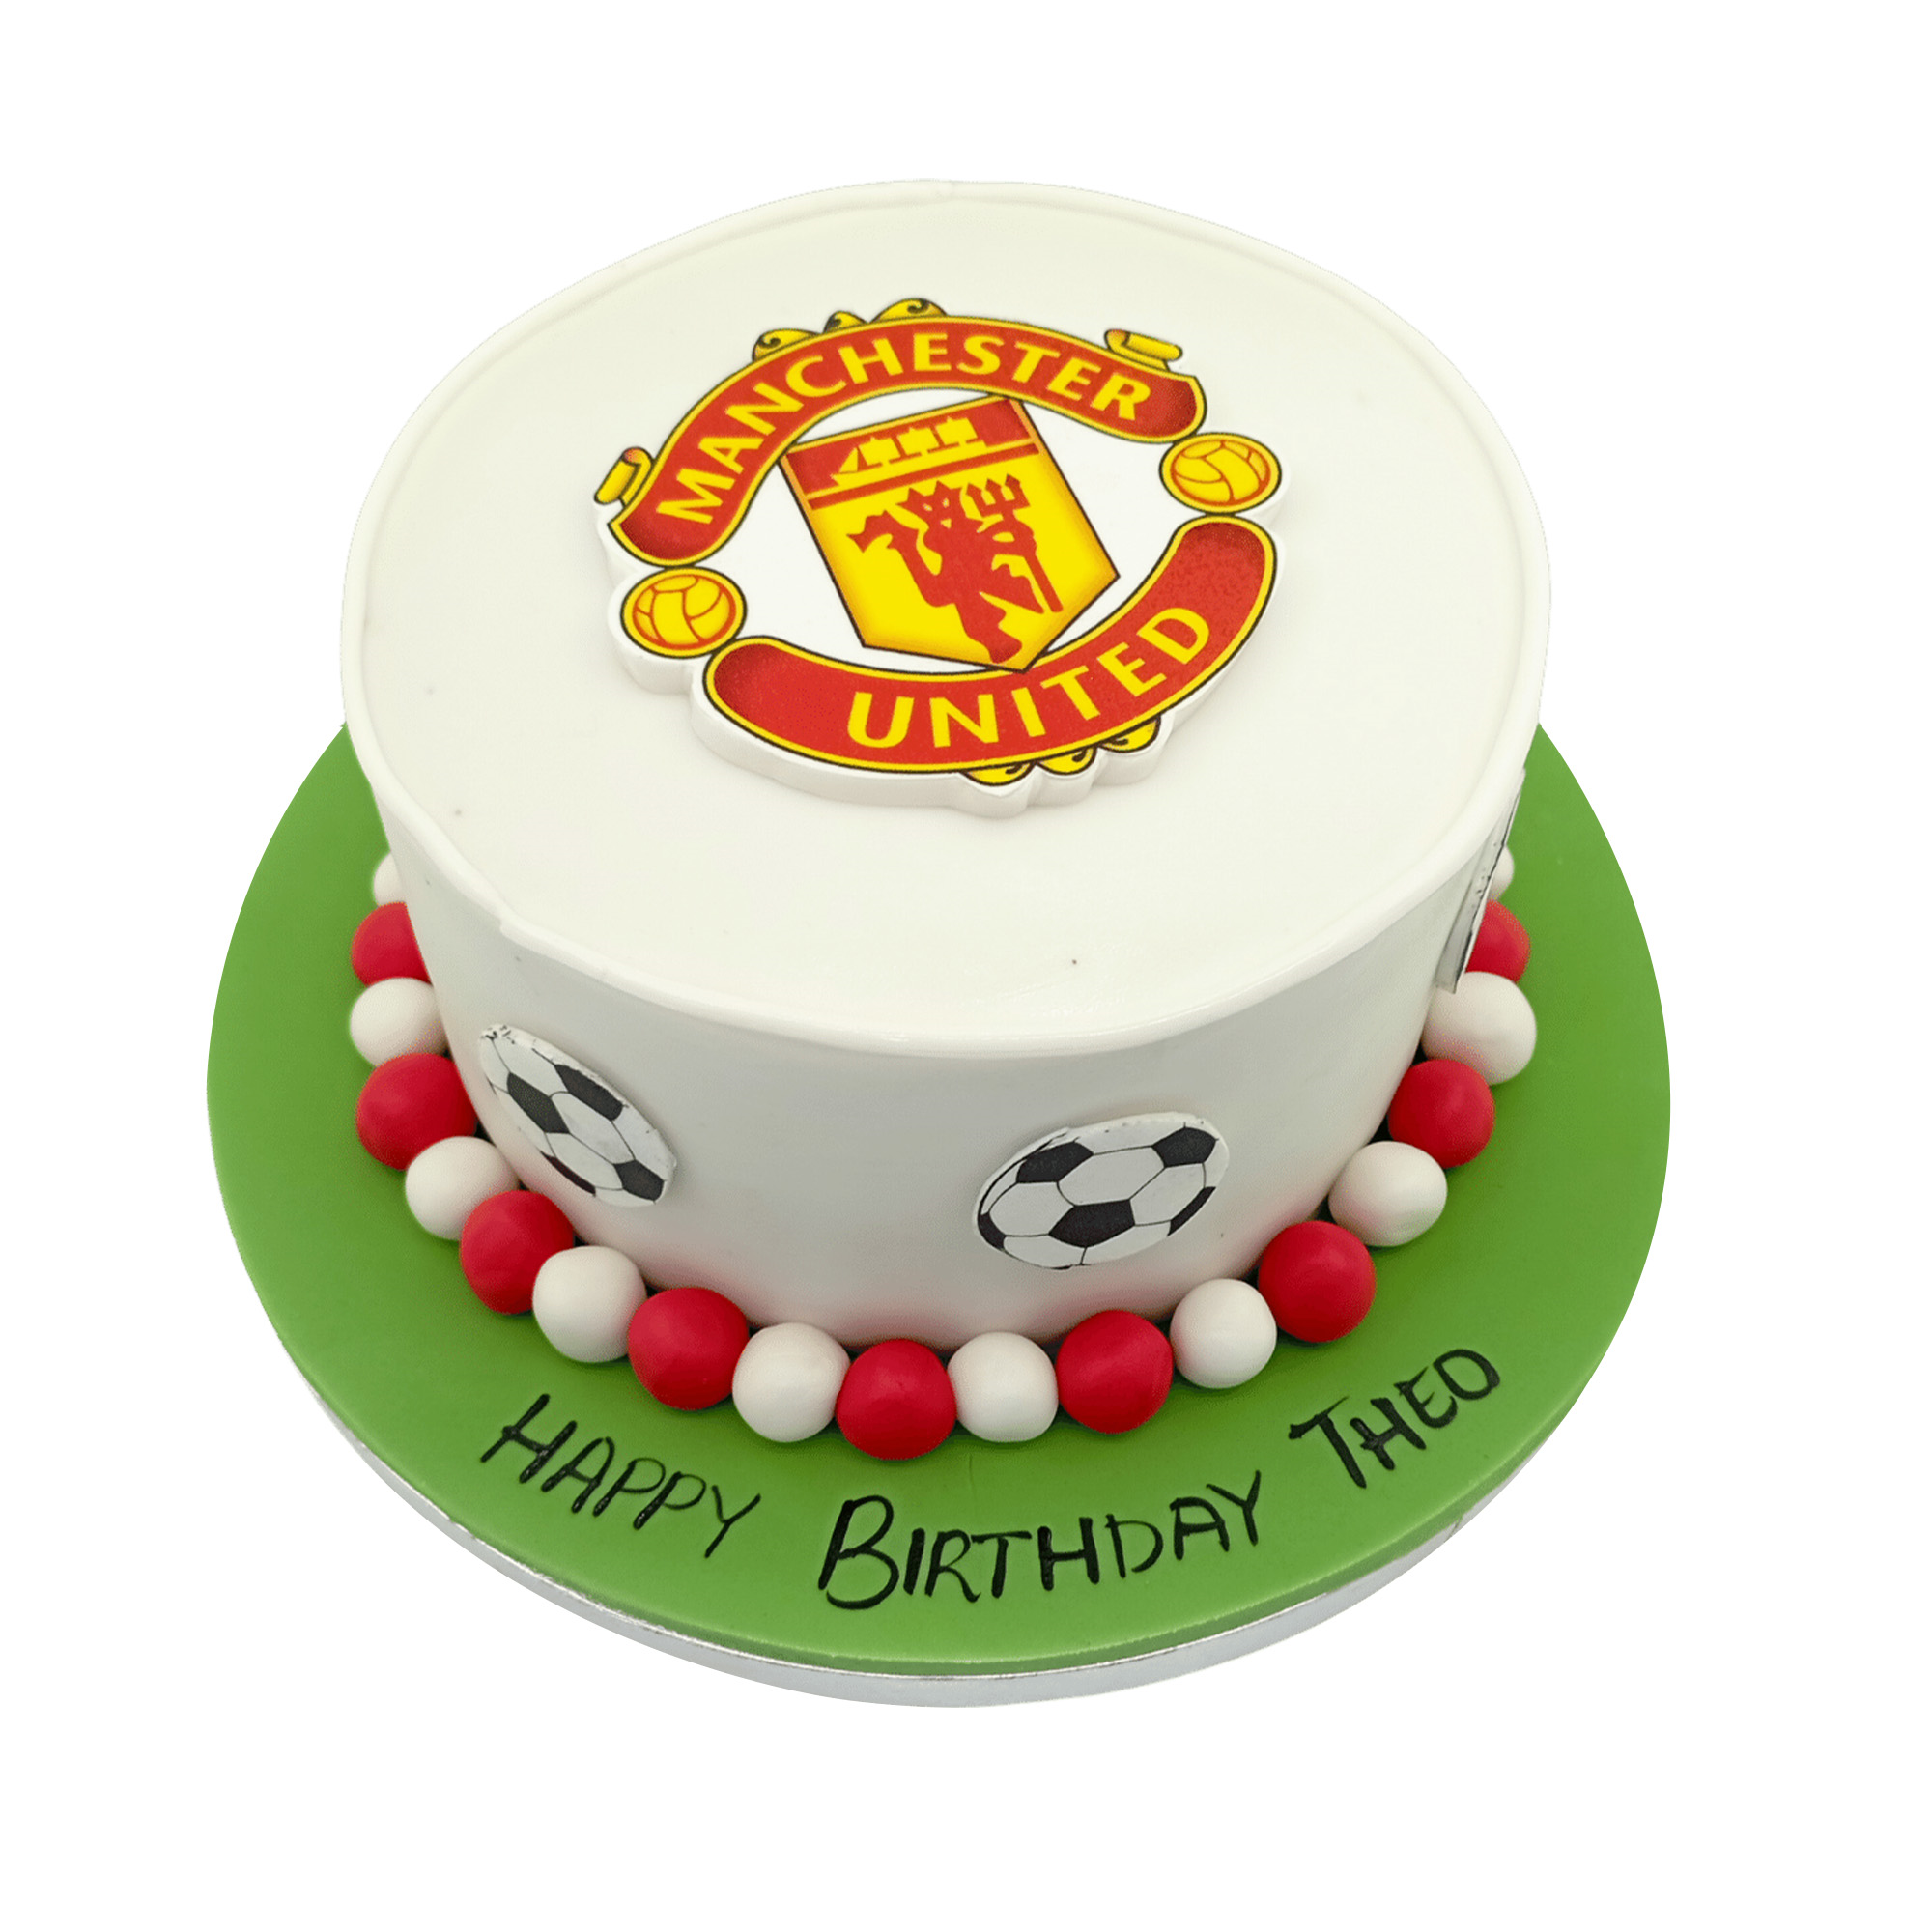 Manchester United Football Birthday Cake